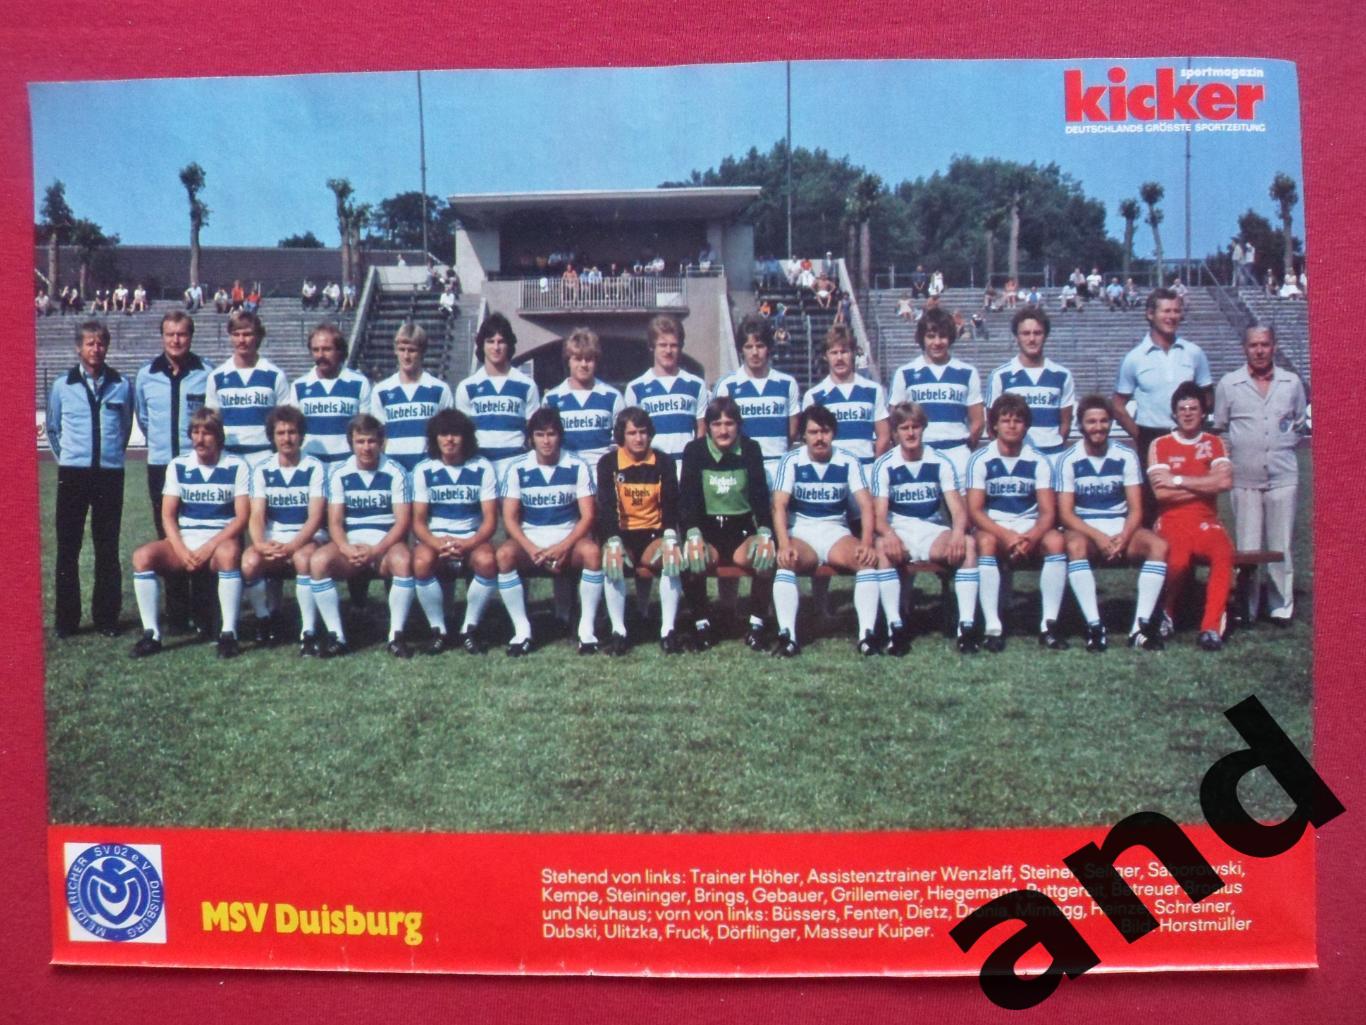 постер Kicker Дуйсбург 1979